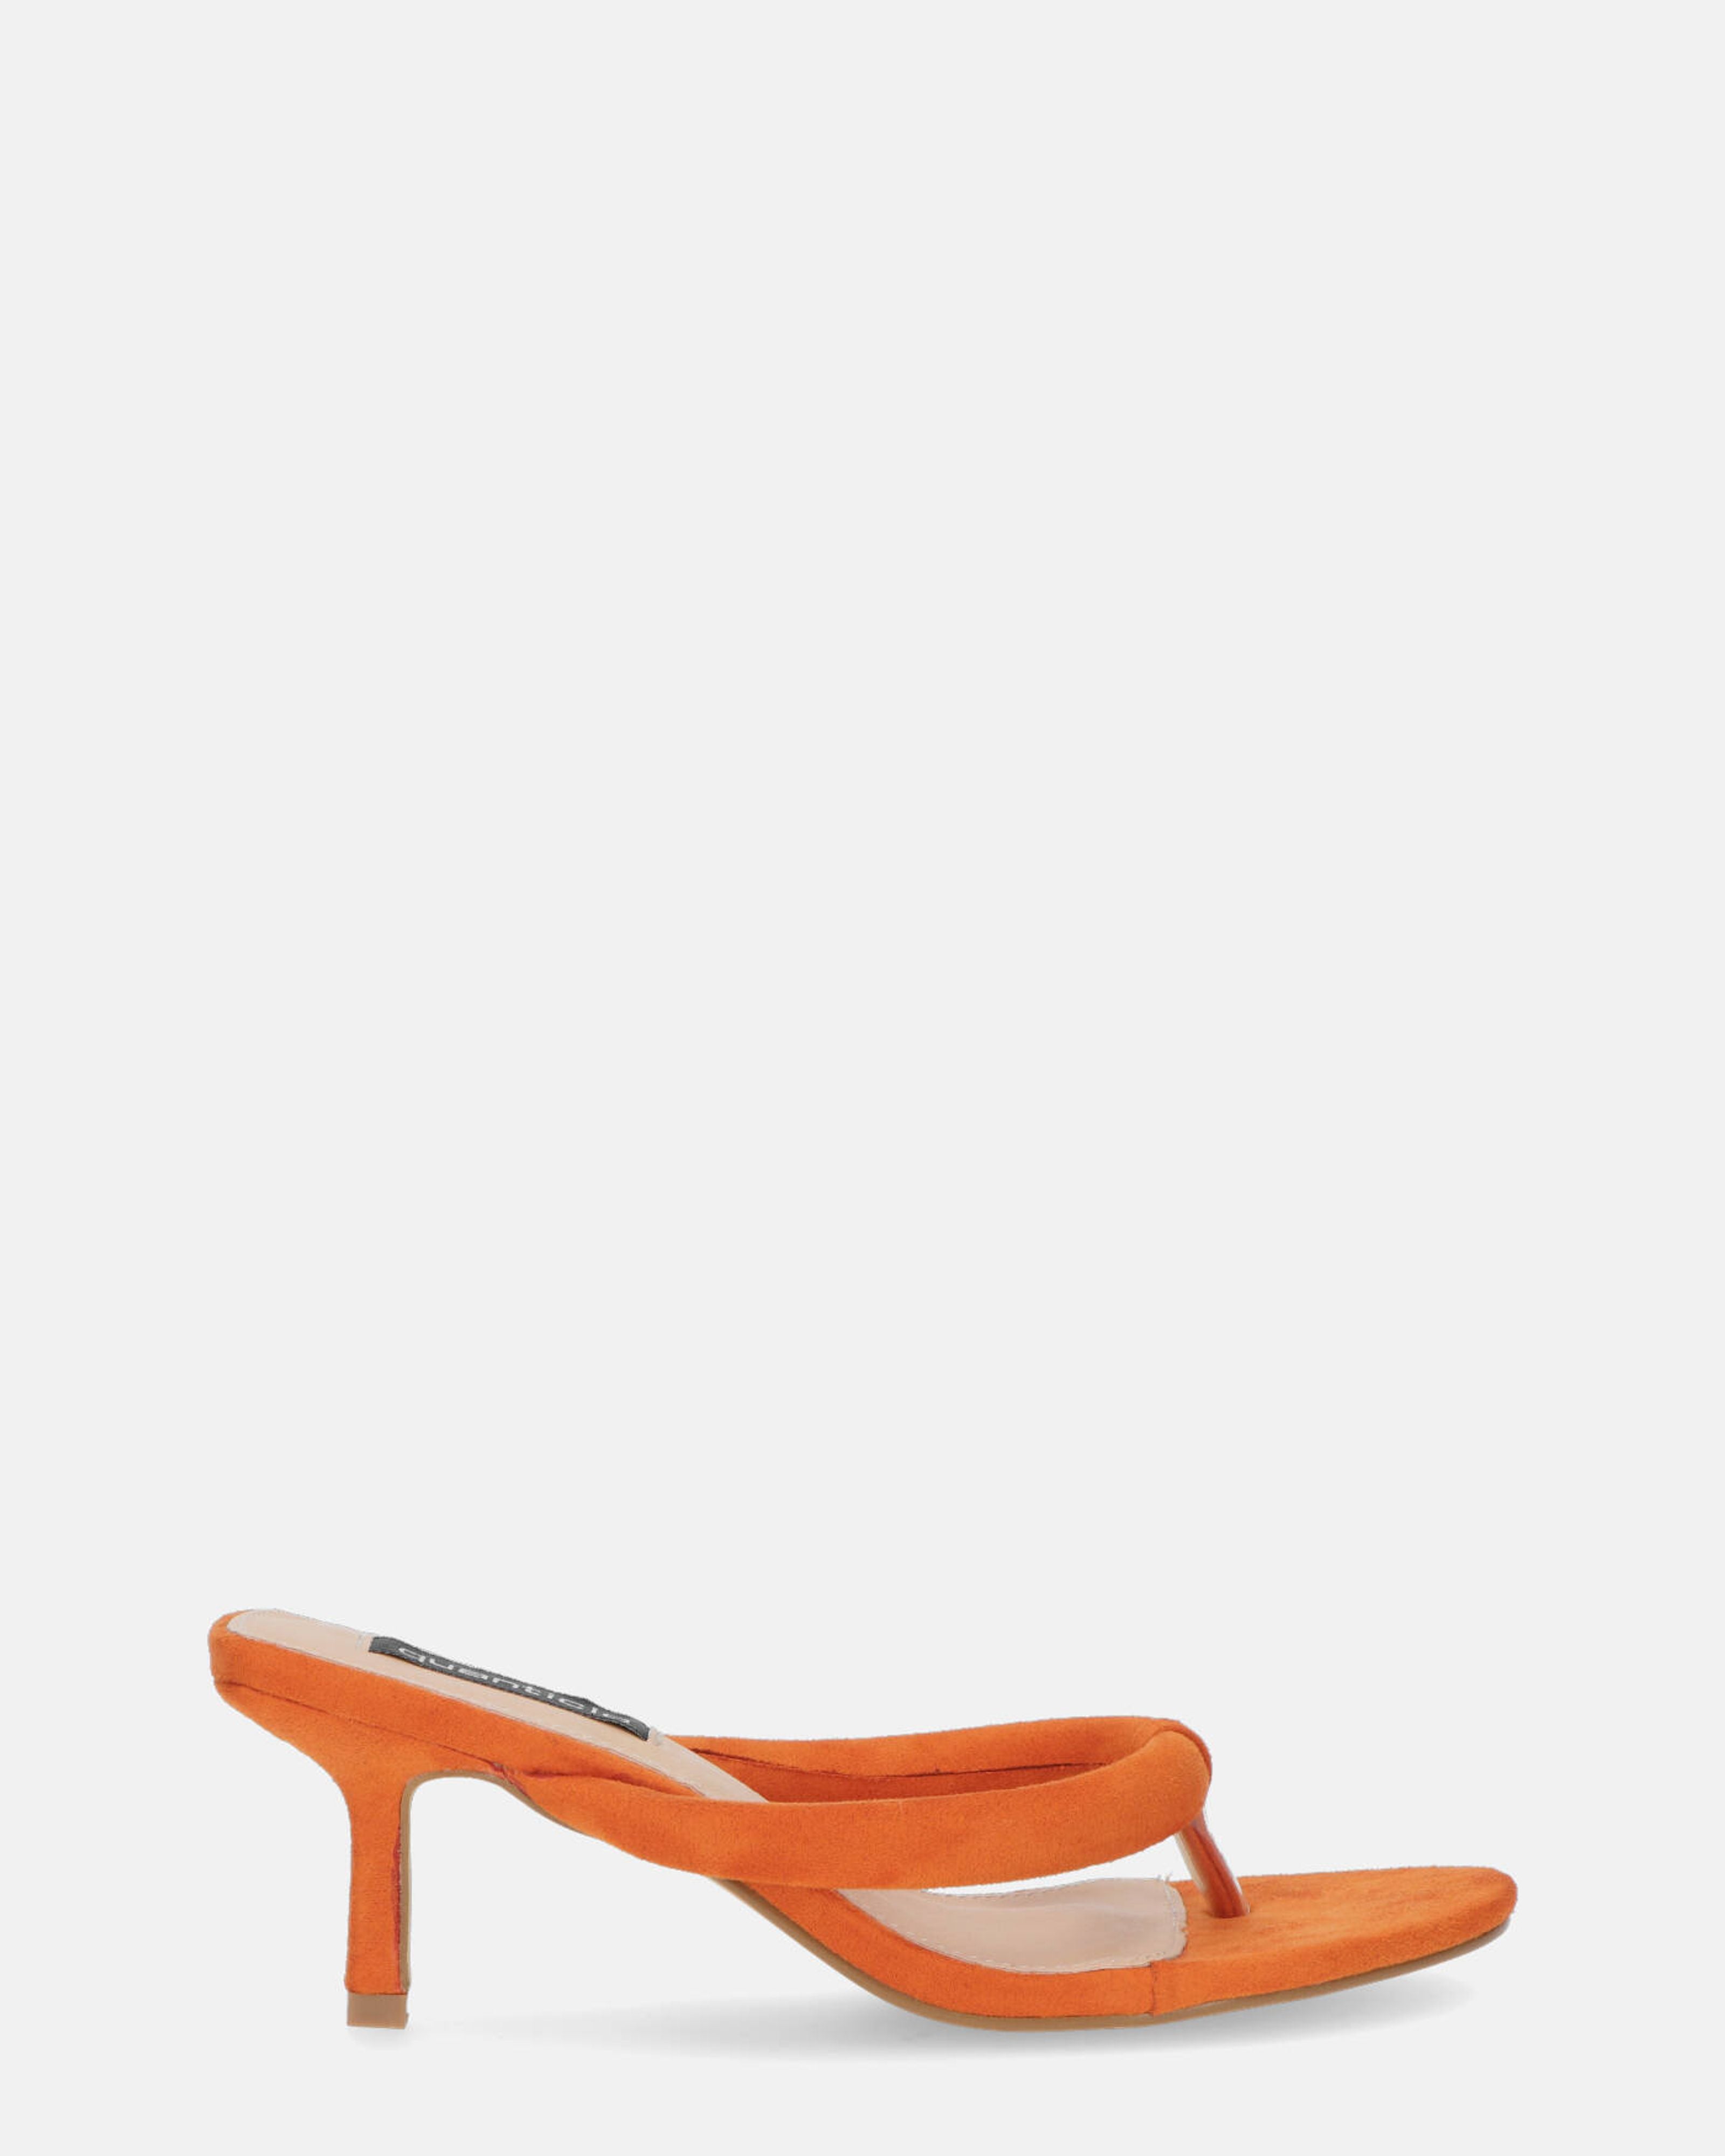 WENDI - sandalia con tacón en ante naranja